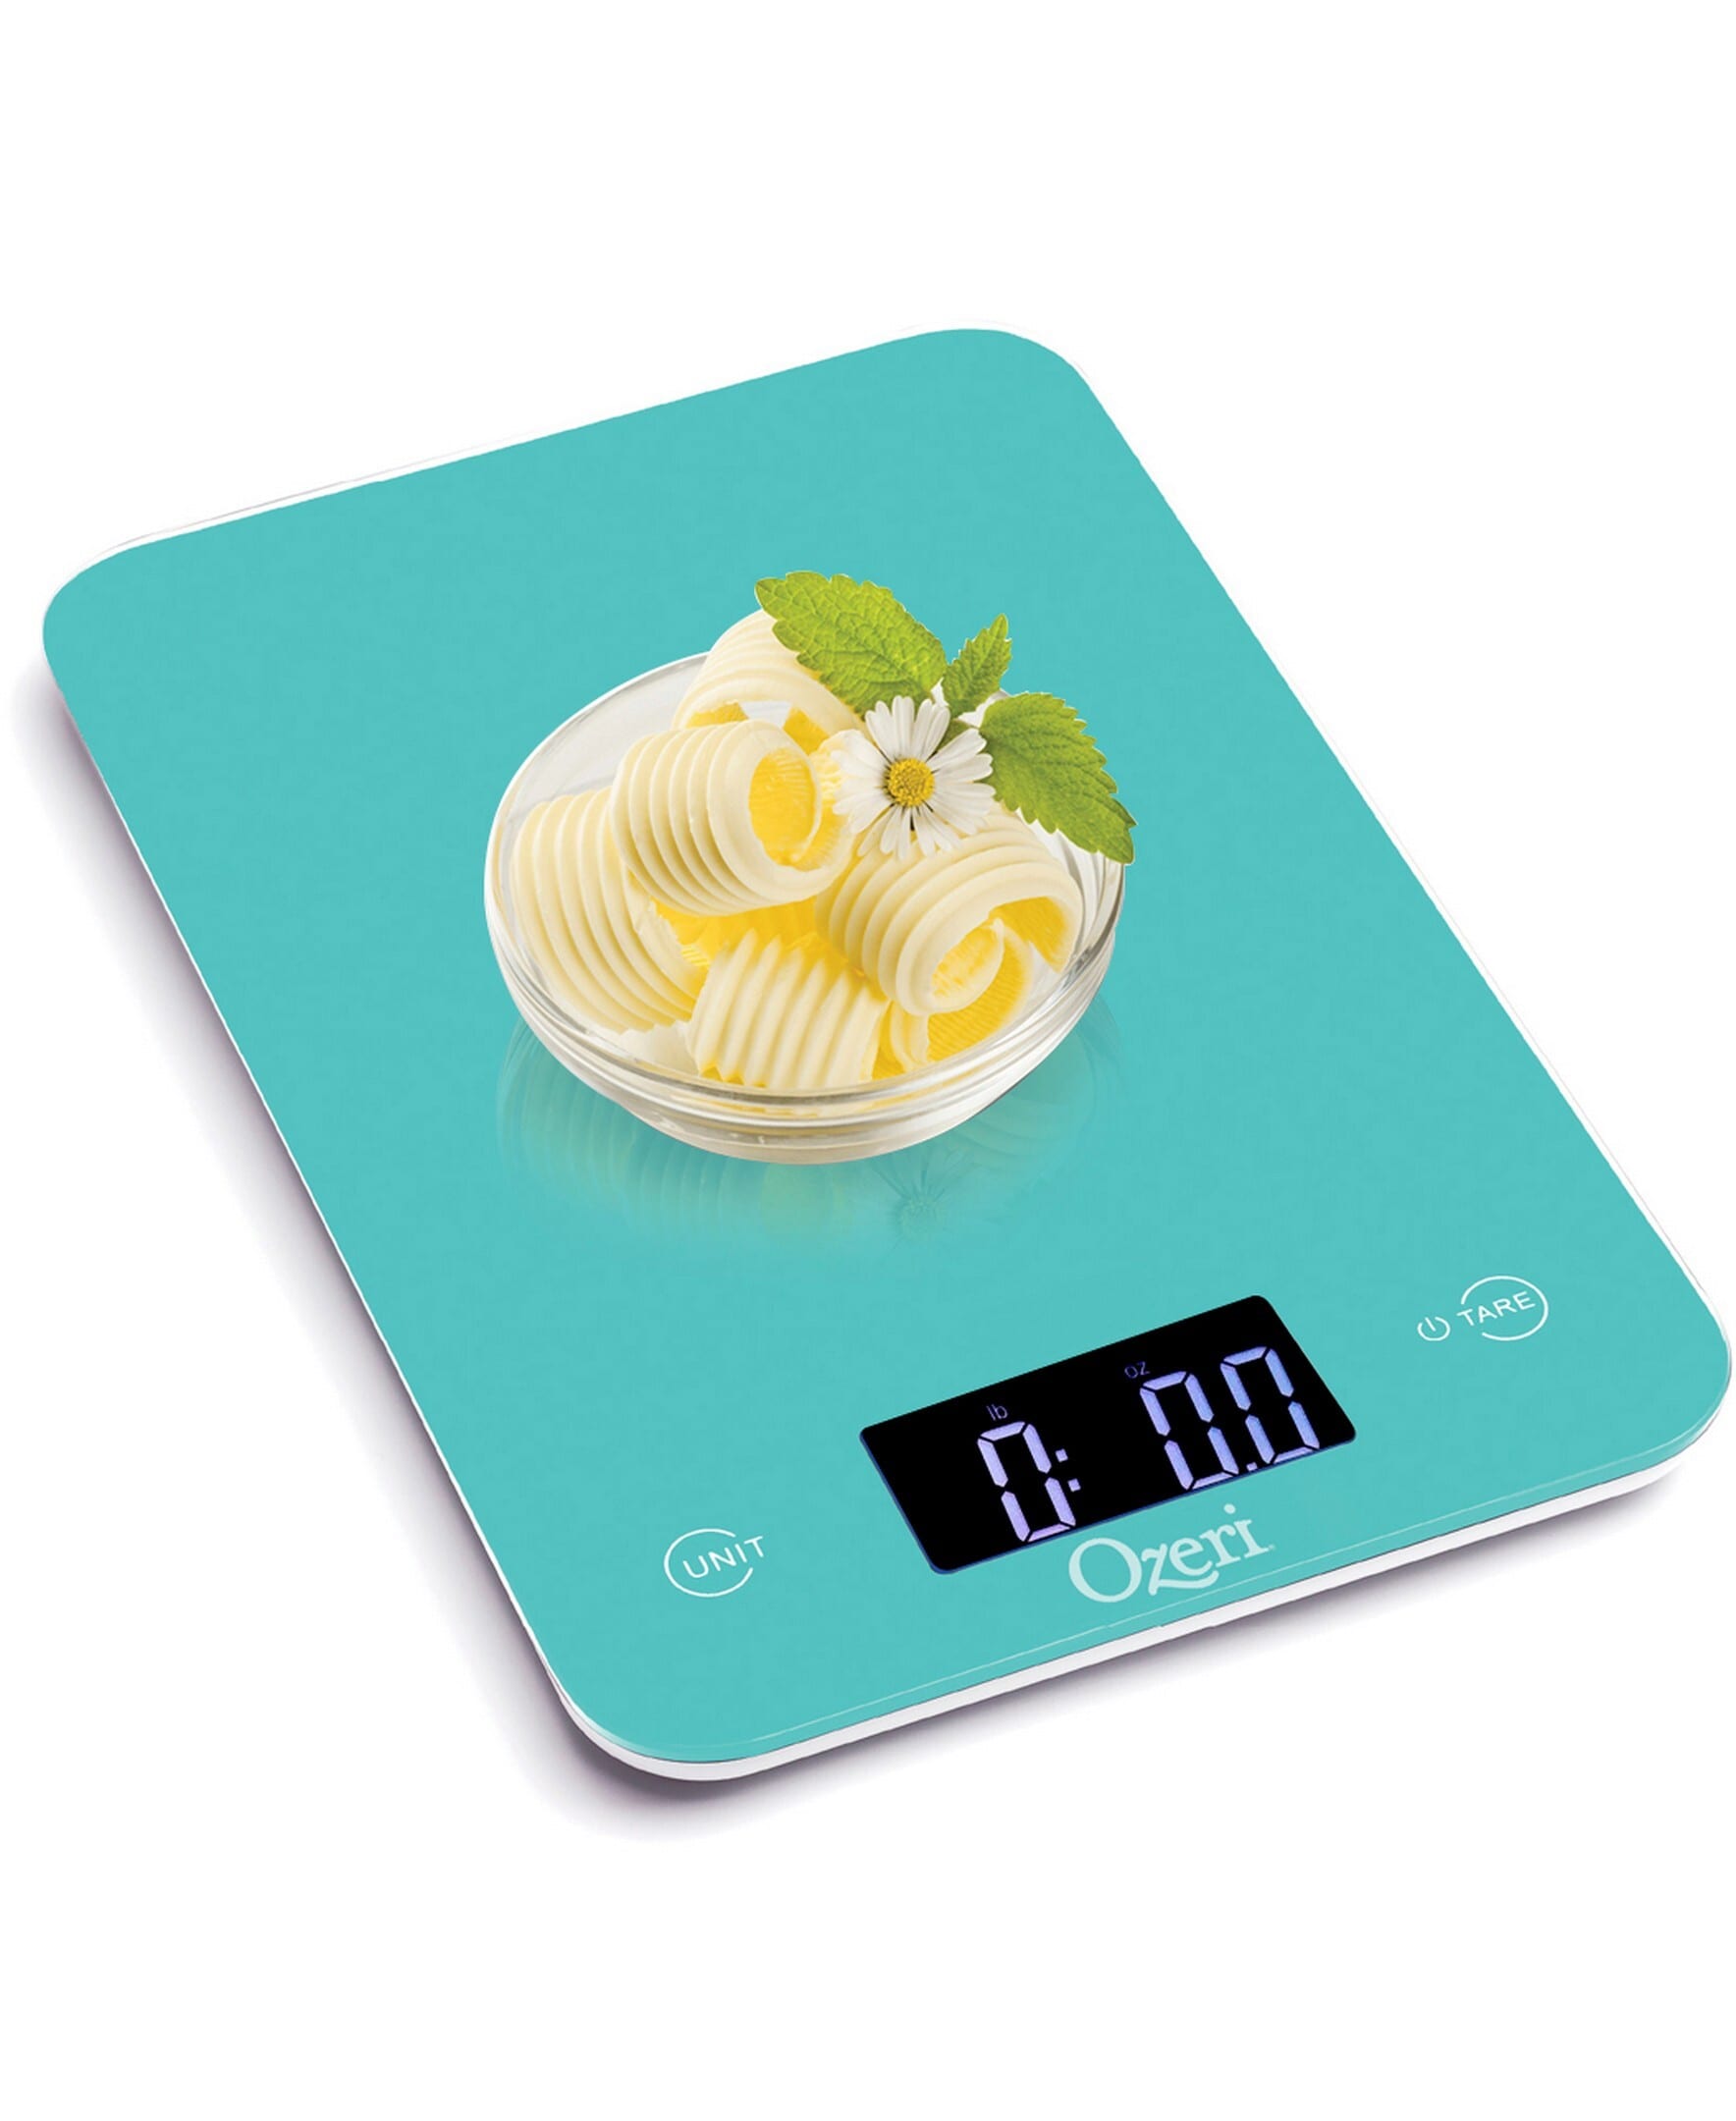 Ozeri Pro Digital Kitchen Food Scale 1G to 12 lbs Capacity - Black